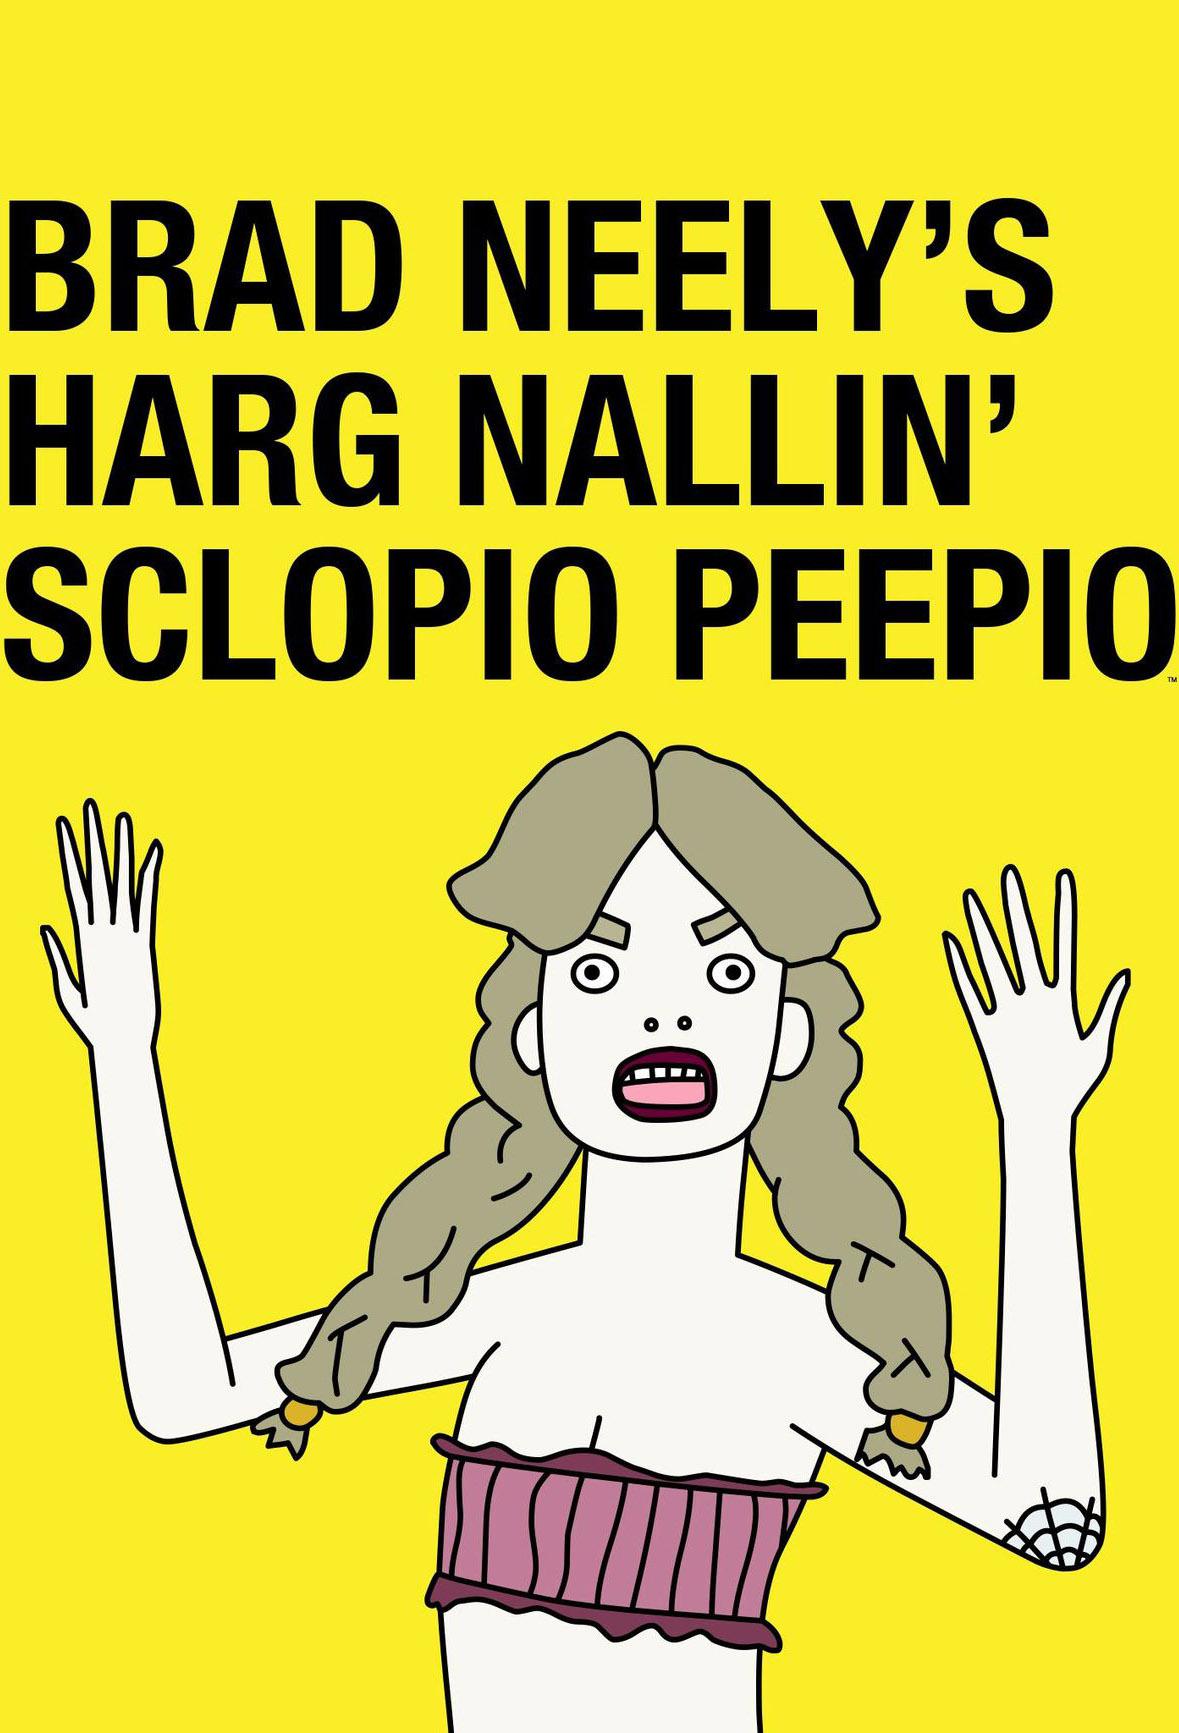 TV ratings for Brad Neely's Harg Nallin' Sclopio Peepio in South Korea. Adult Swim TV series